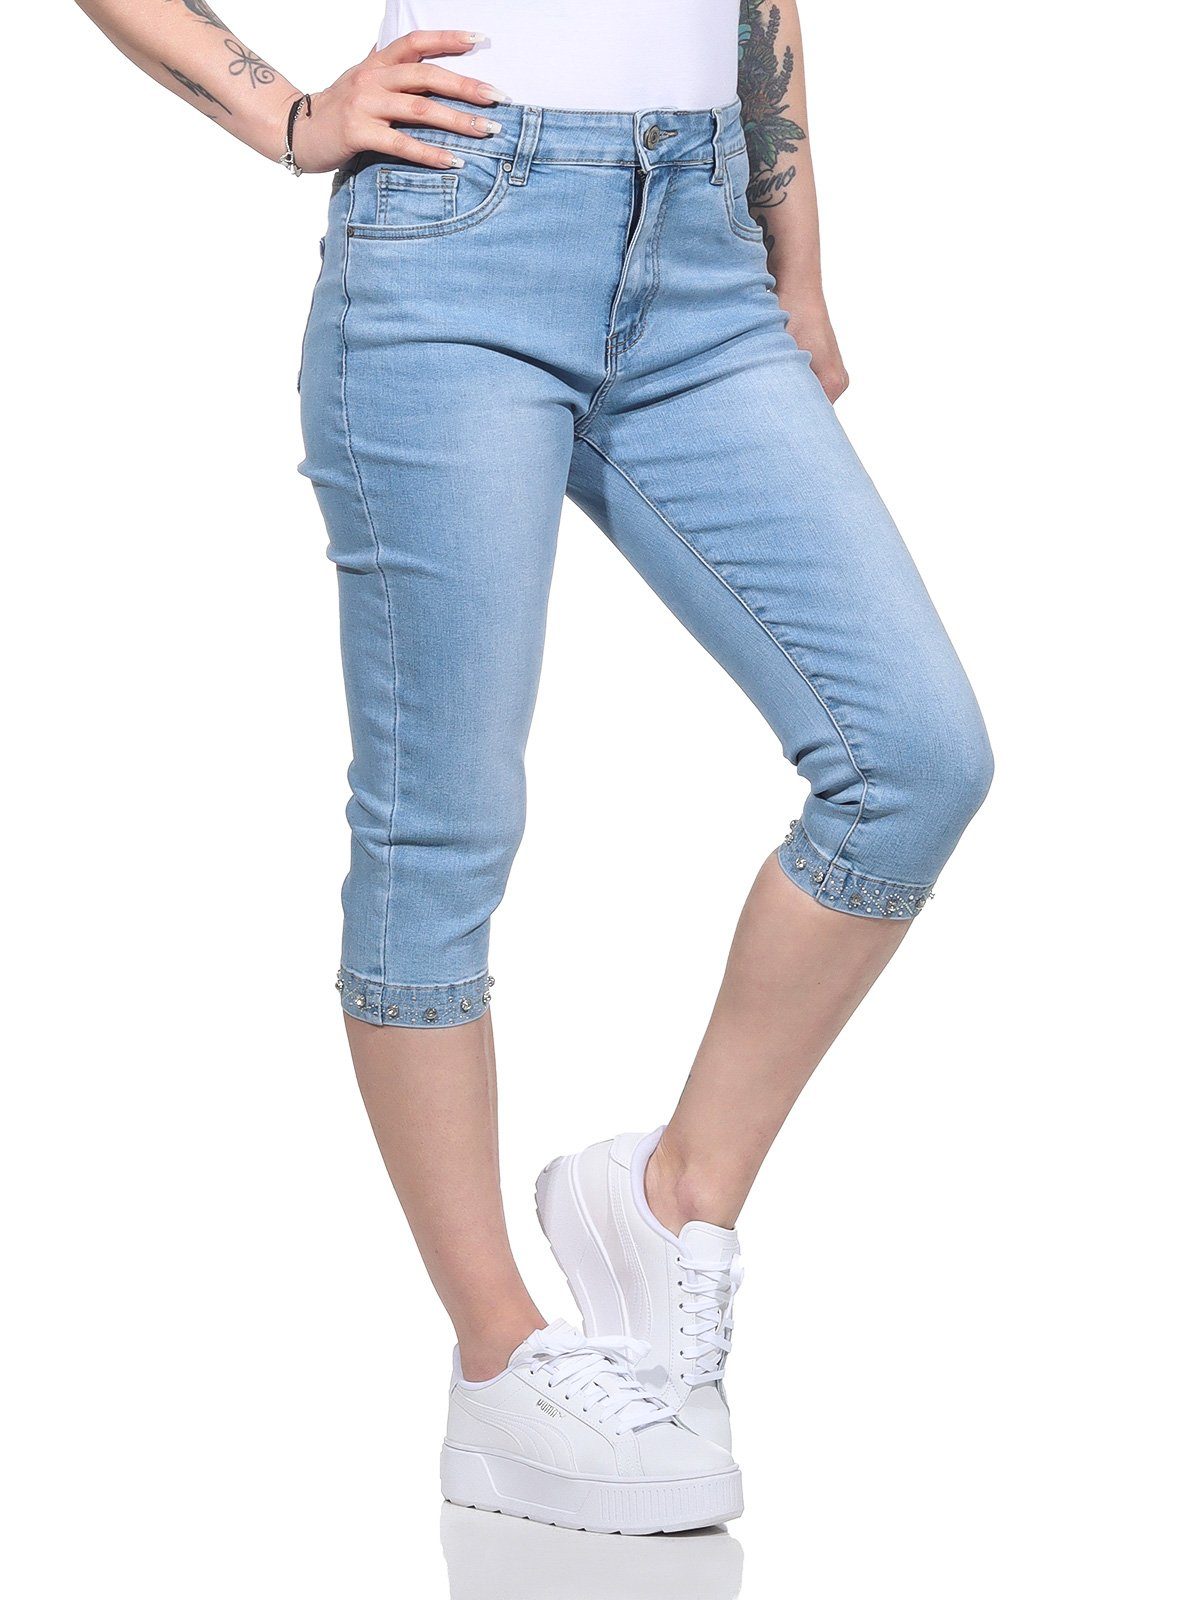 Aurela Damenmode Jeansbermudas 5-Pocket-Style kurze mit Damen Caprihosen Stretchanteil, Jeans Sommer Bermuda Jeanshosen